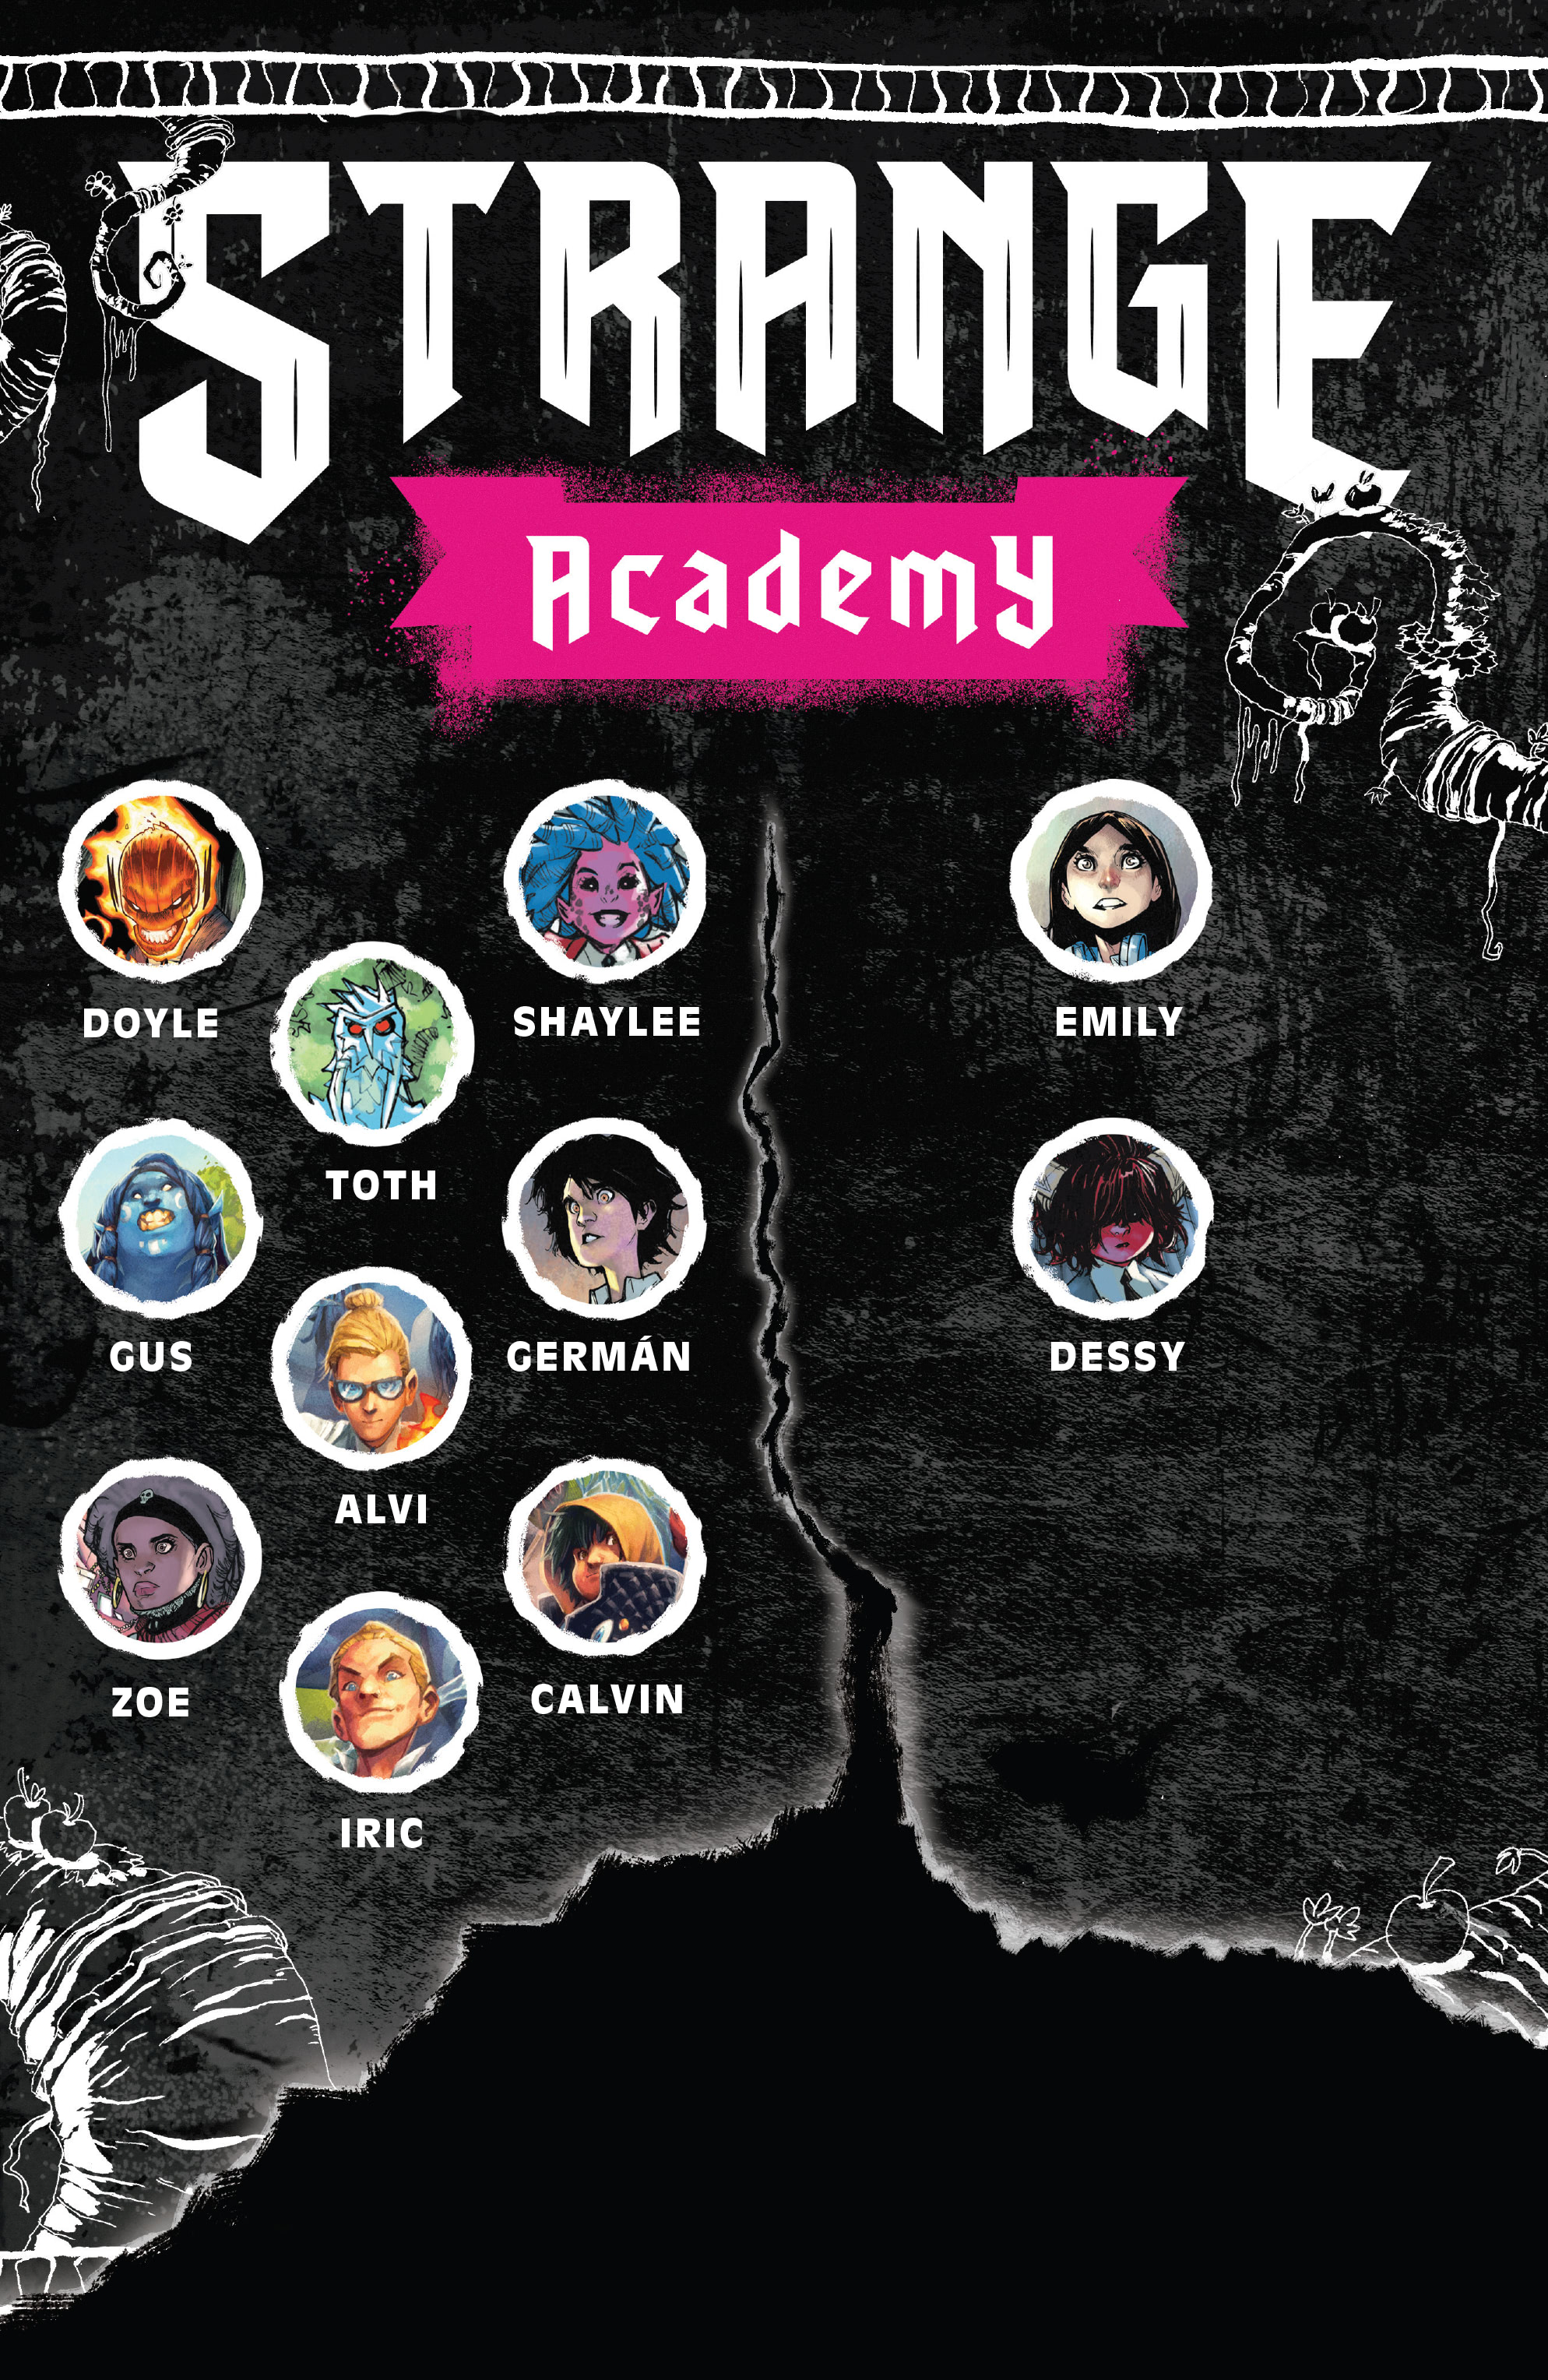 Read online Strange Academy: Finals comic -  Issue #6 - 3